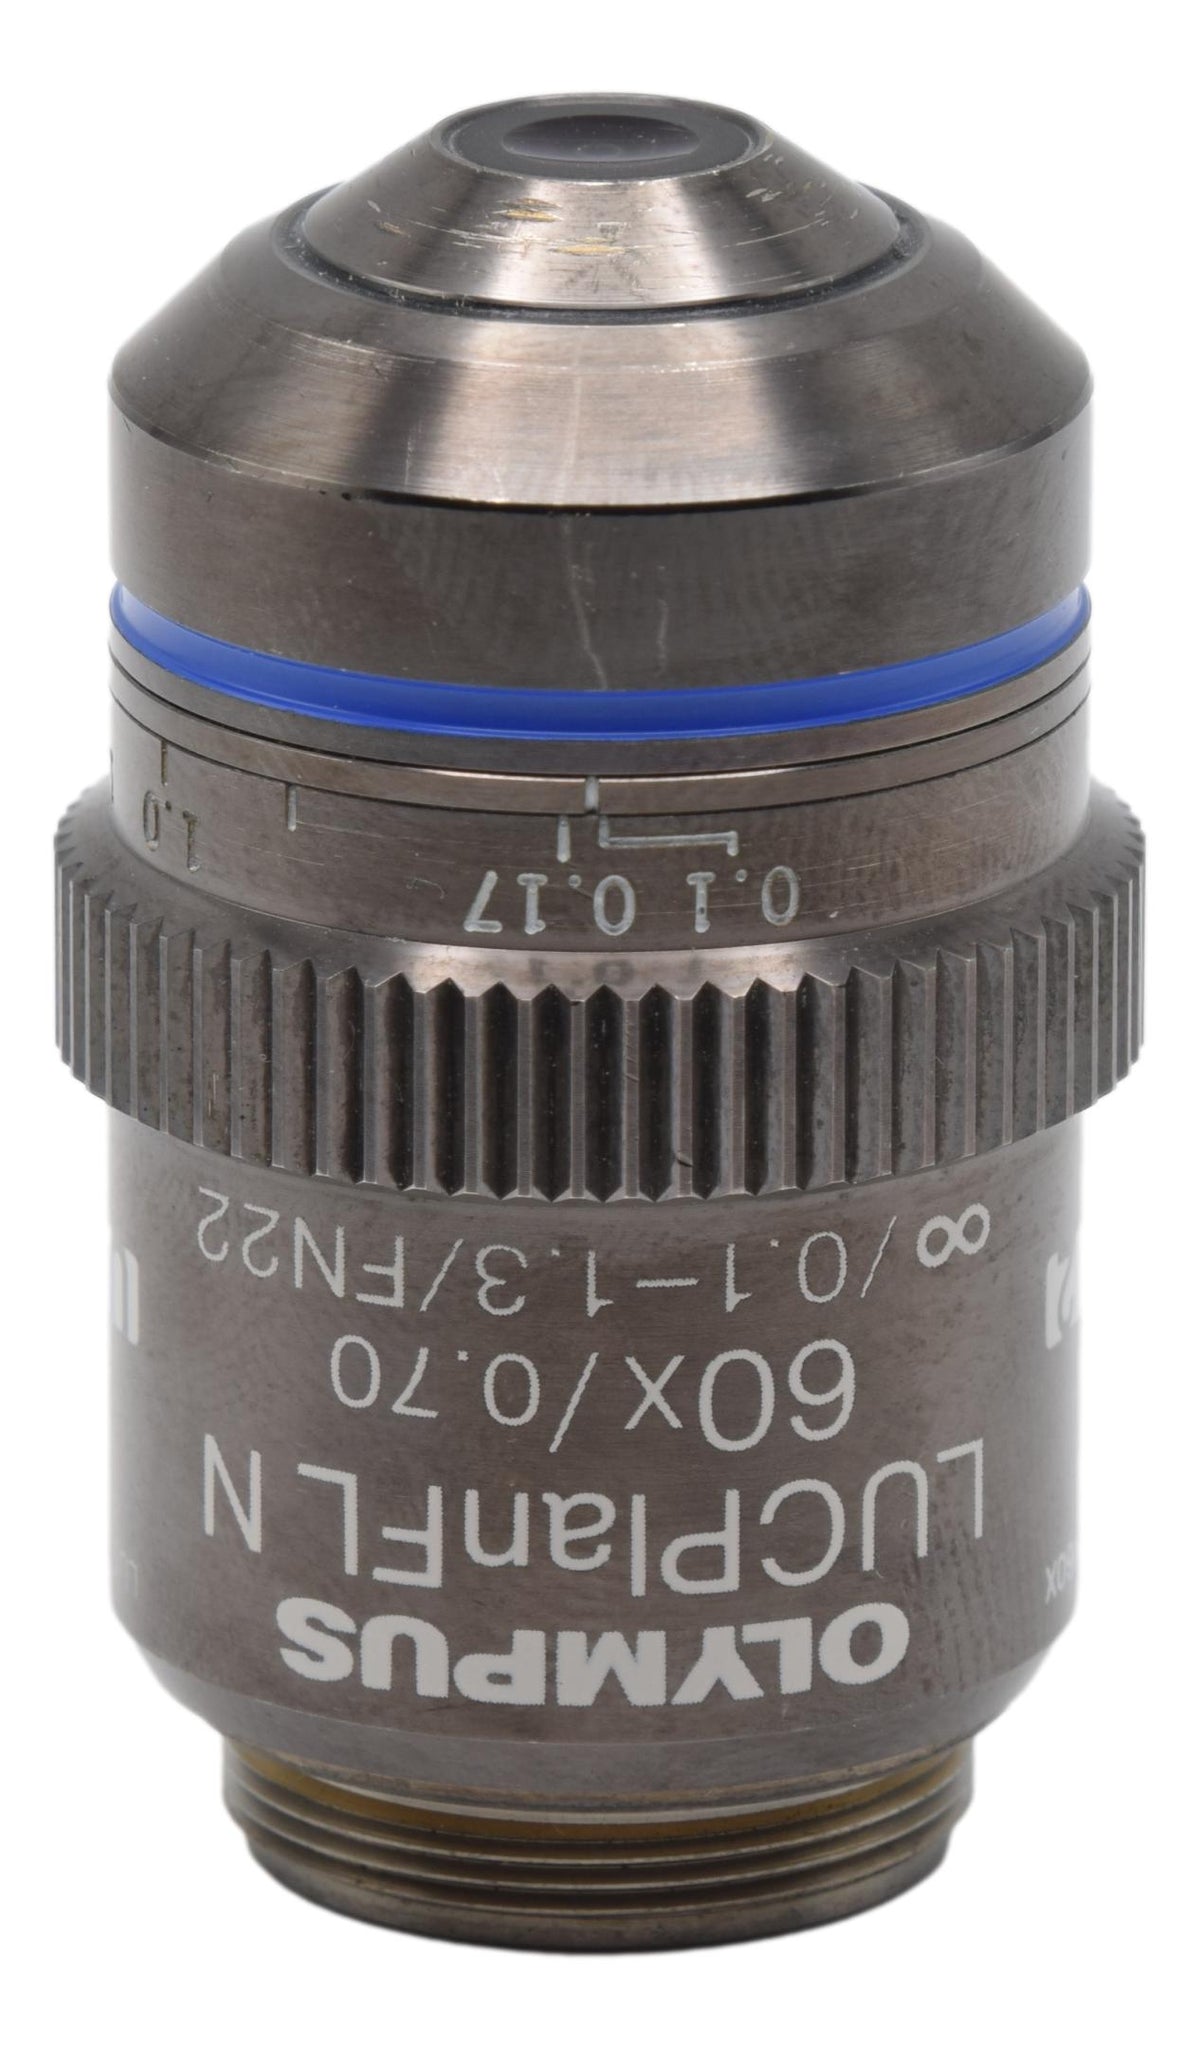 Olympus LUCPlanFL N 60x Microscope Objective